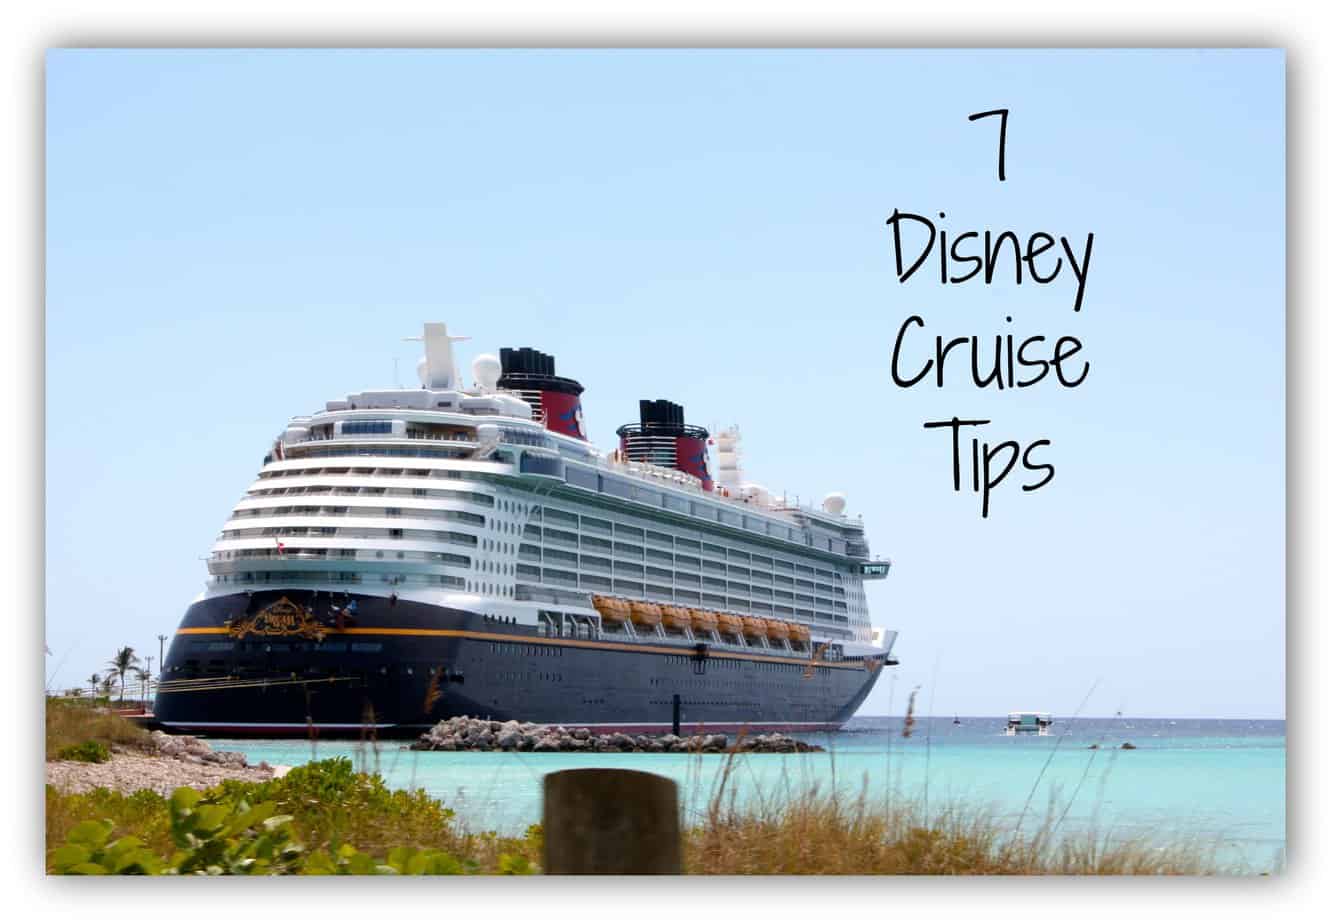 7 Disney Cruise Tips